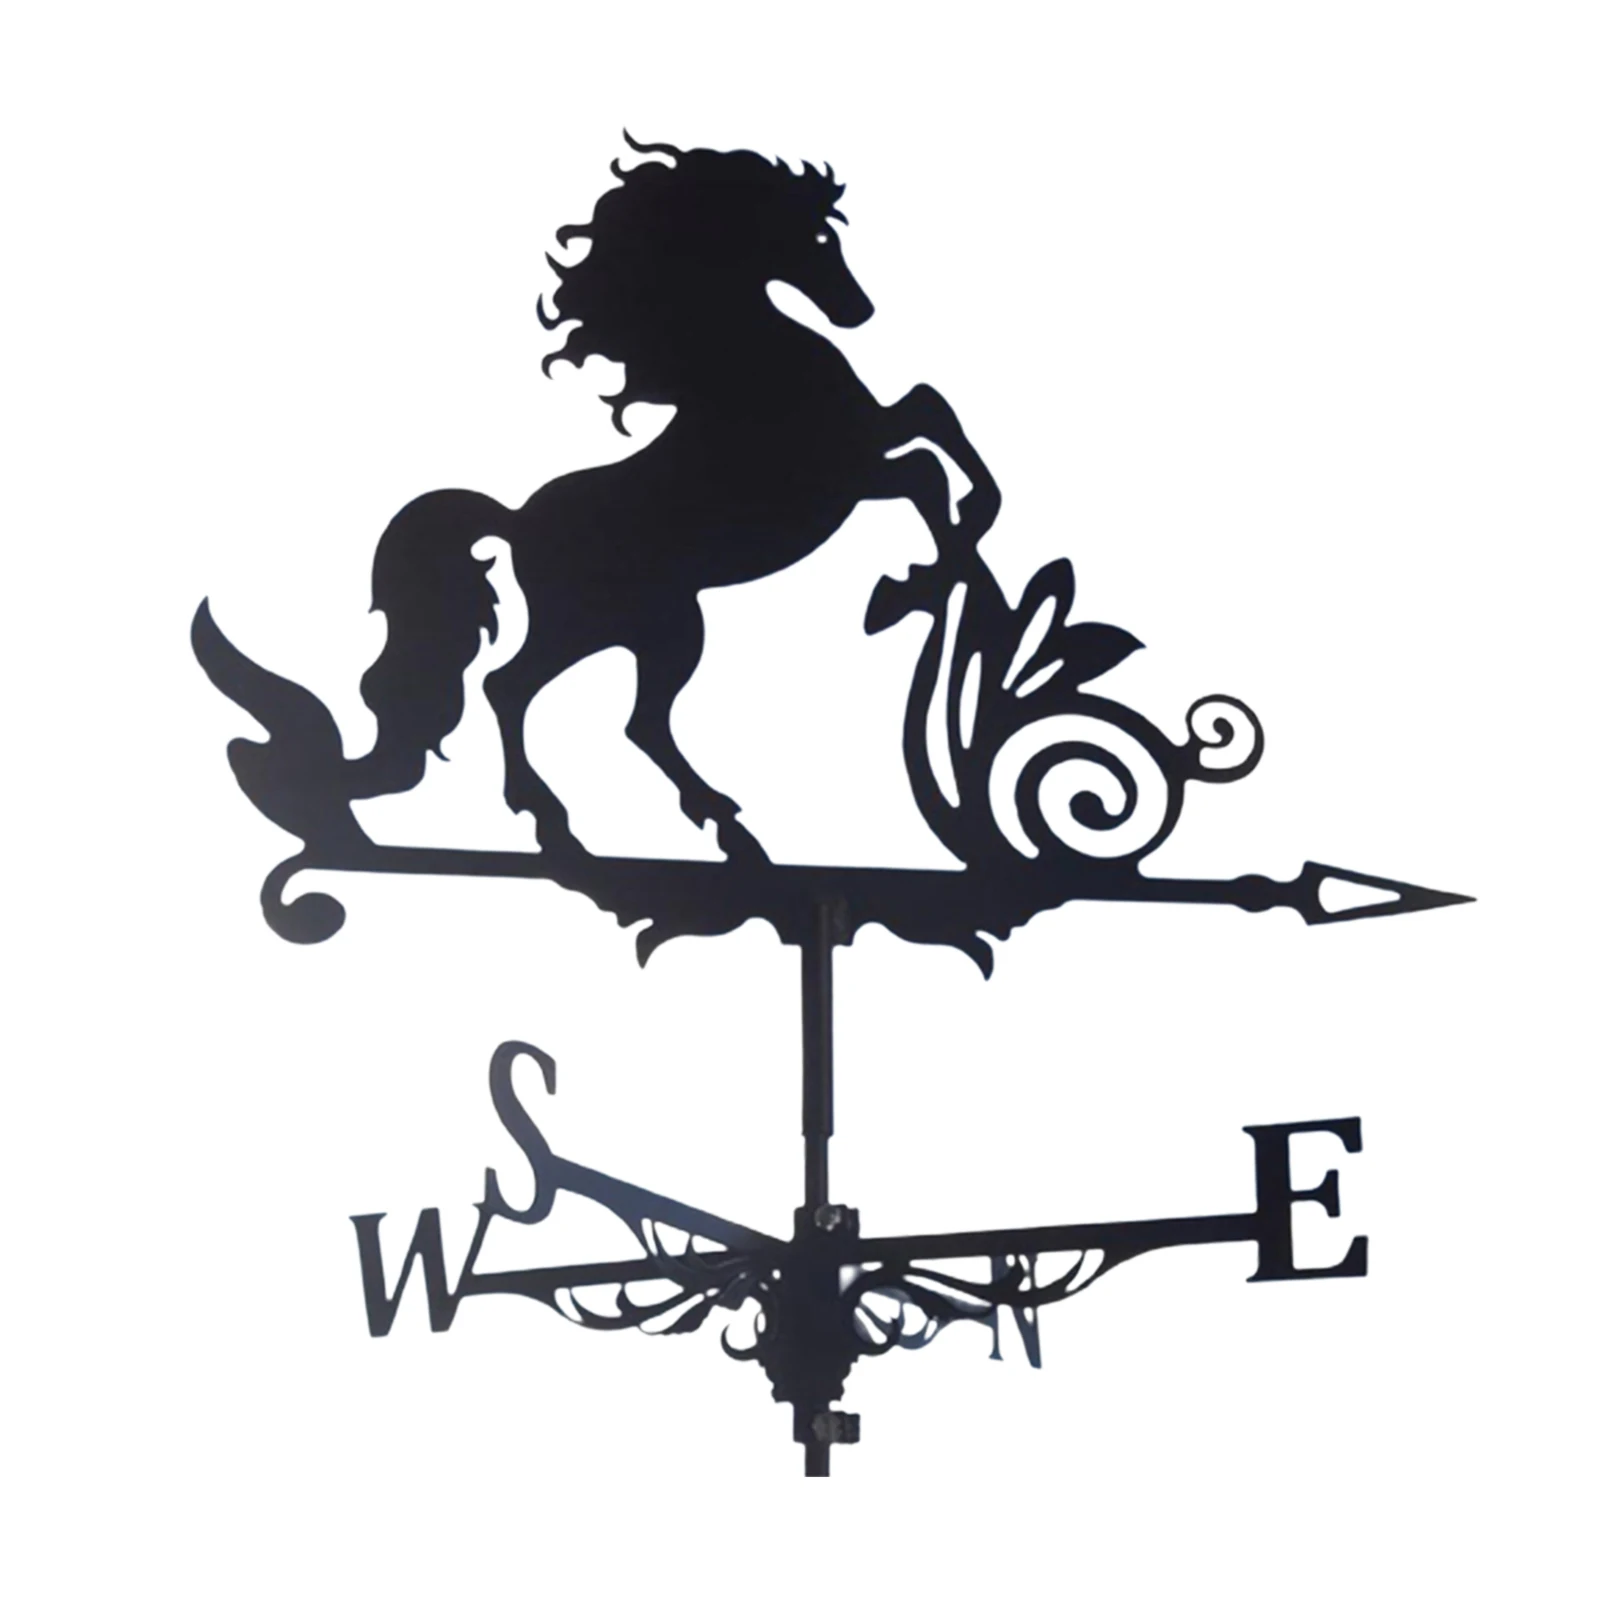 Durable Iron Black Horse Shape Weathervane Fence Mount Weather Vane Wind Direction Indicator Stake Ornament